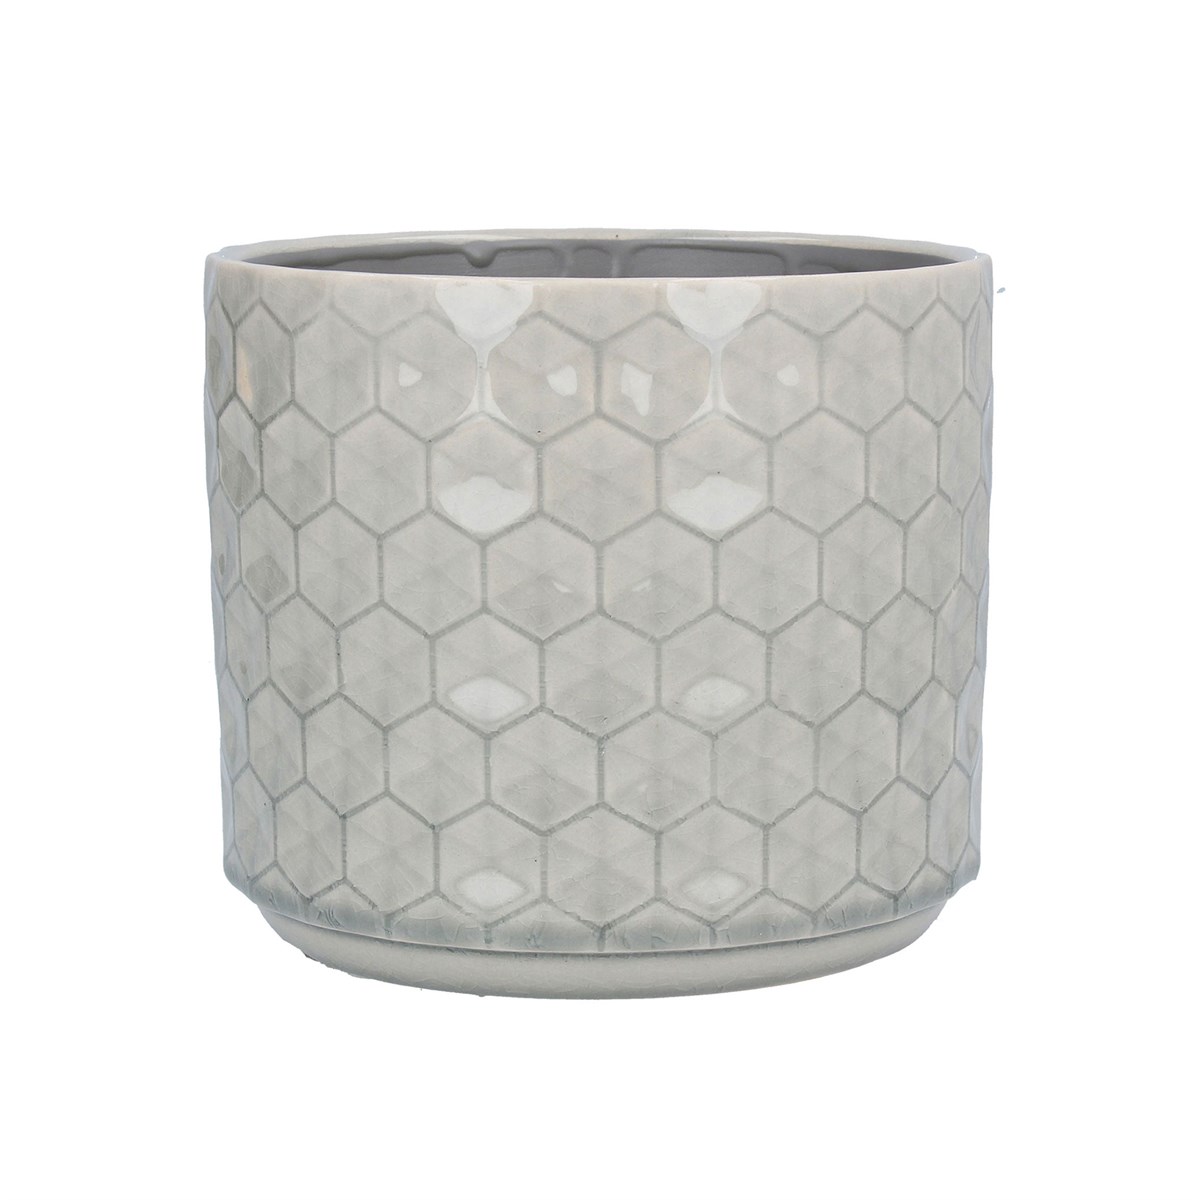 Gisela Graham Grey Honeycomb Ceramic Pot Cover, Medium